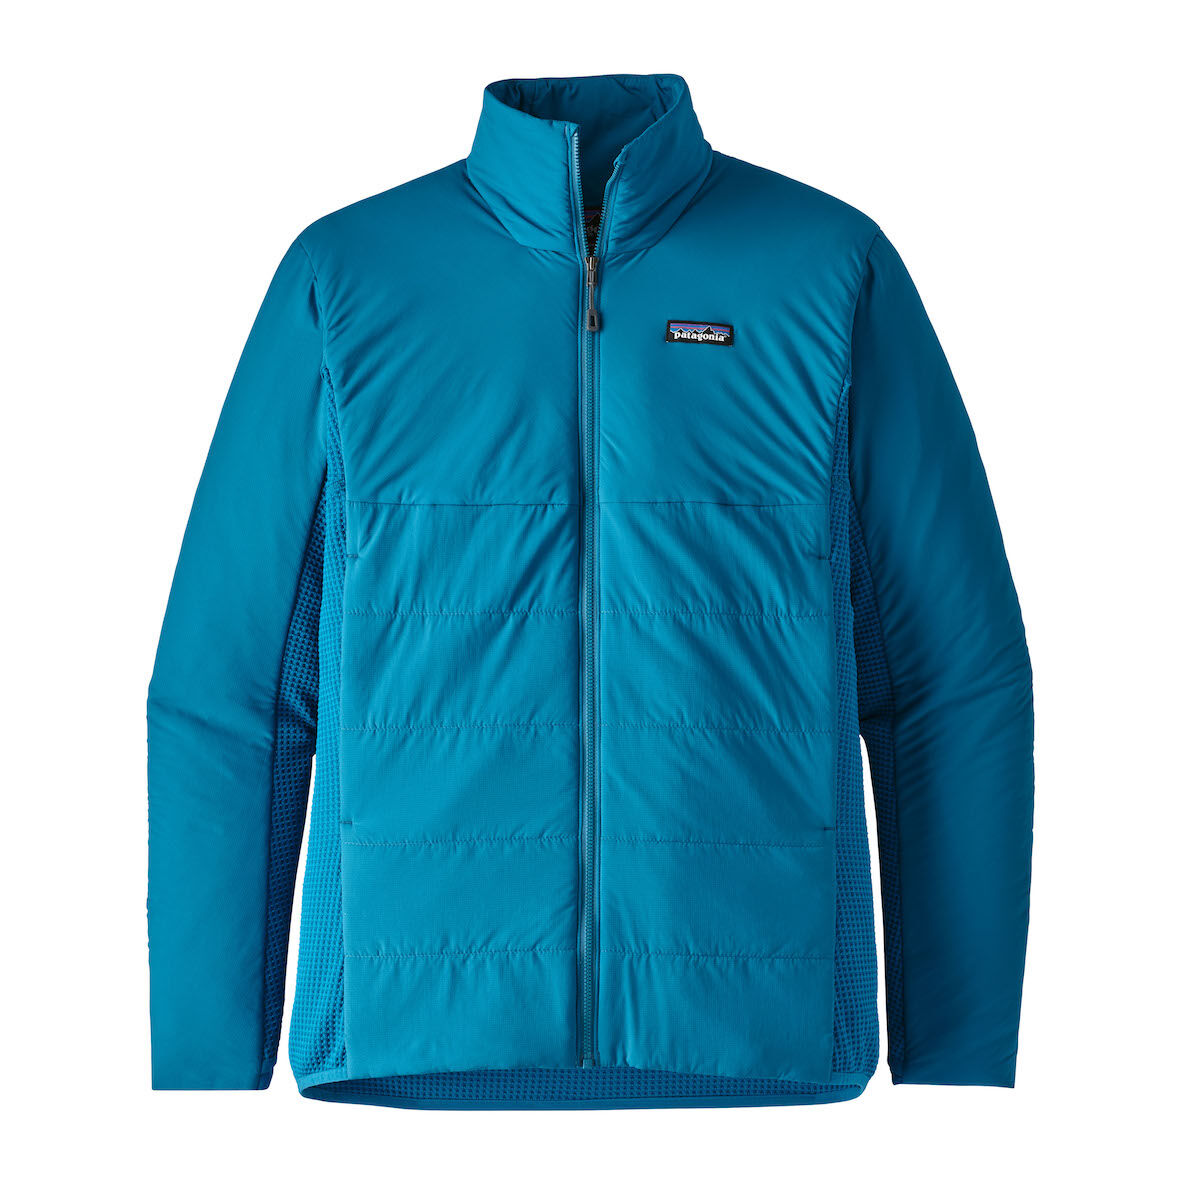 Patagonia - Nano-Air Light Hybrid Jacket - Softshell jacket - Men's